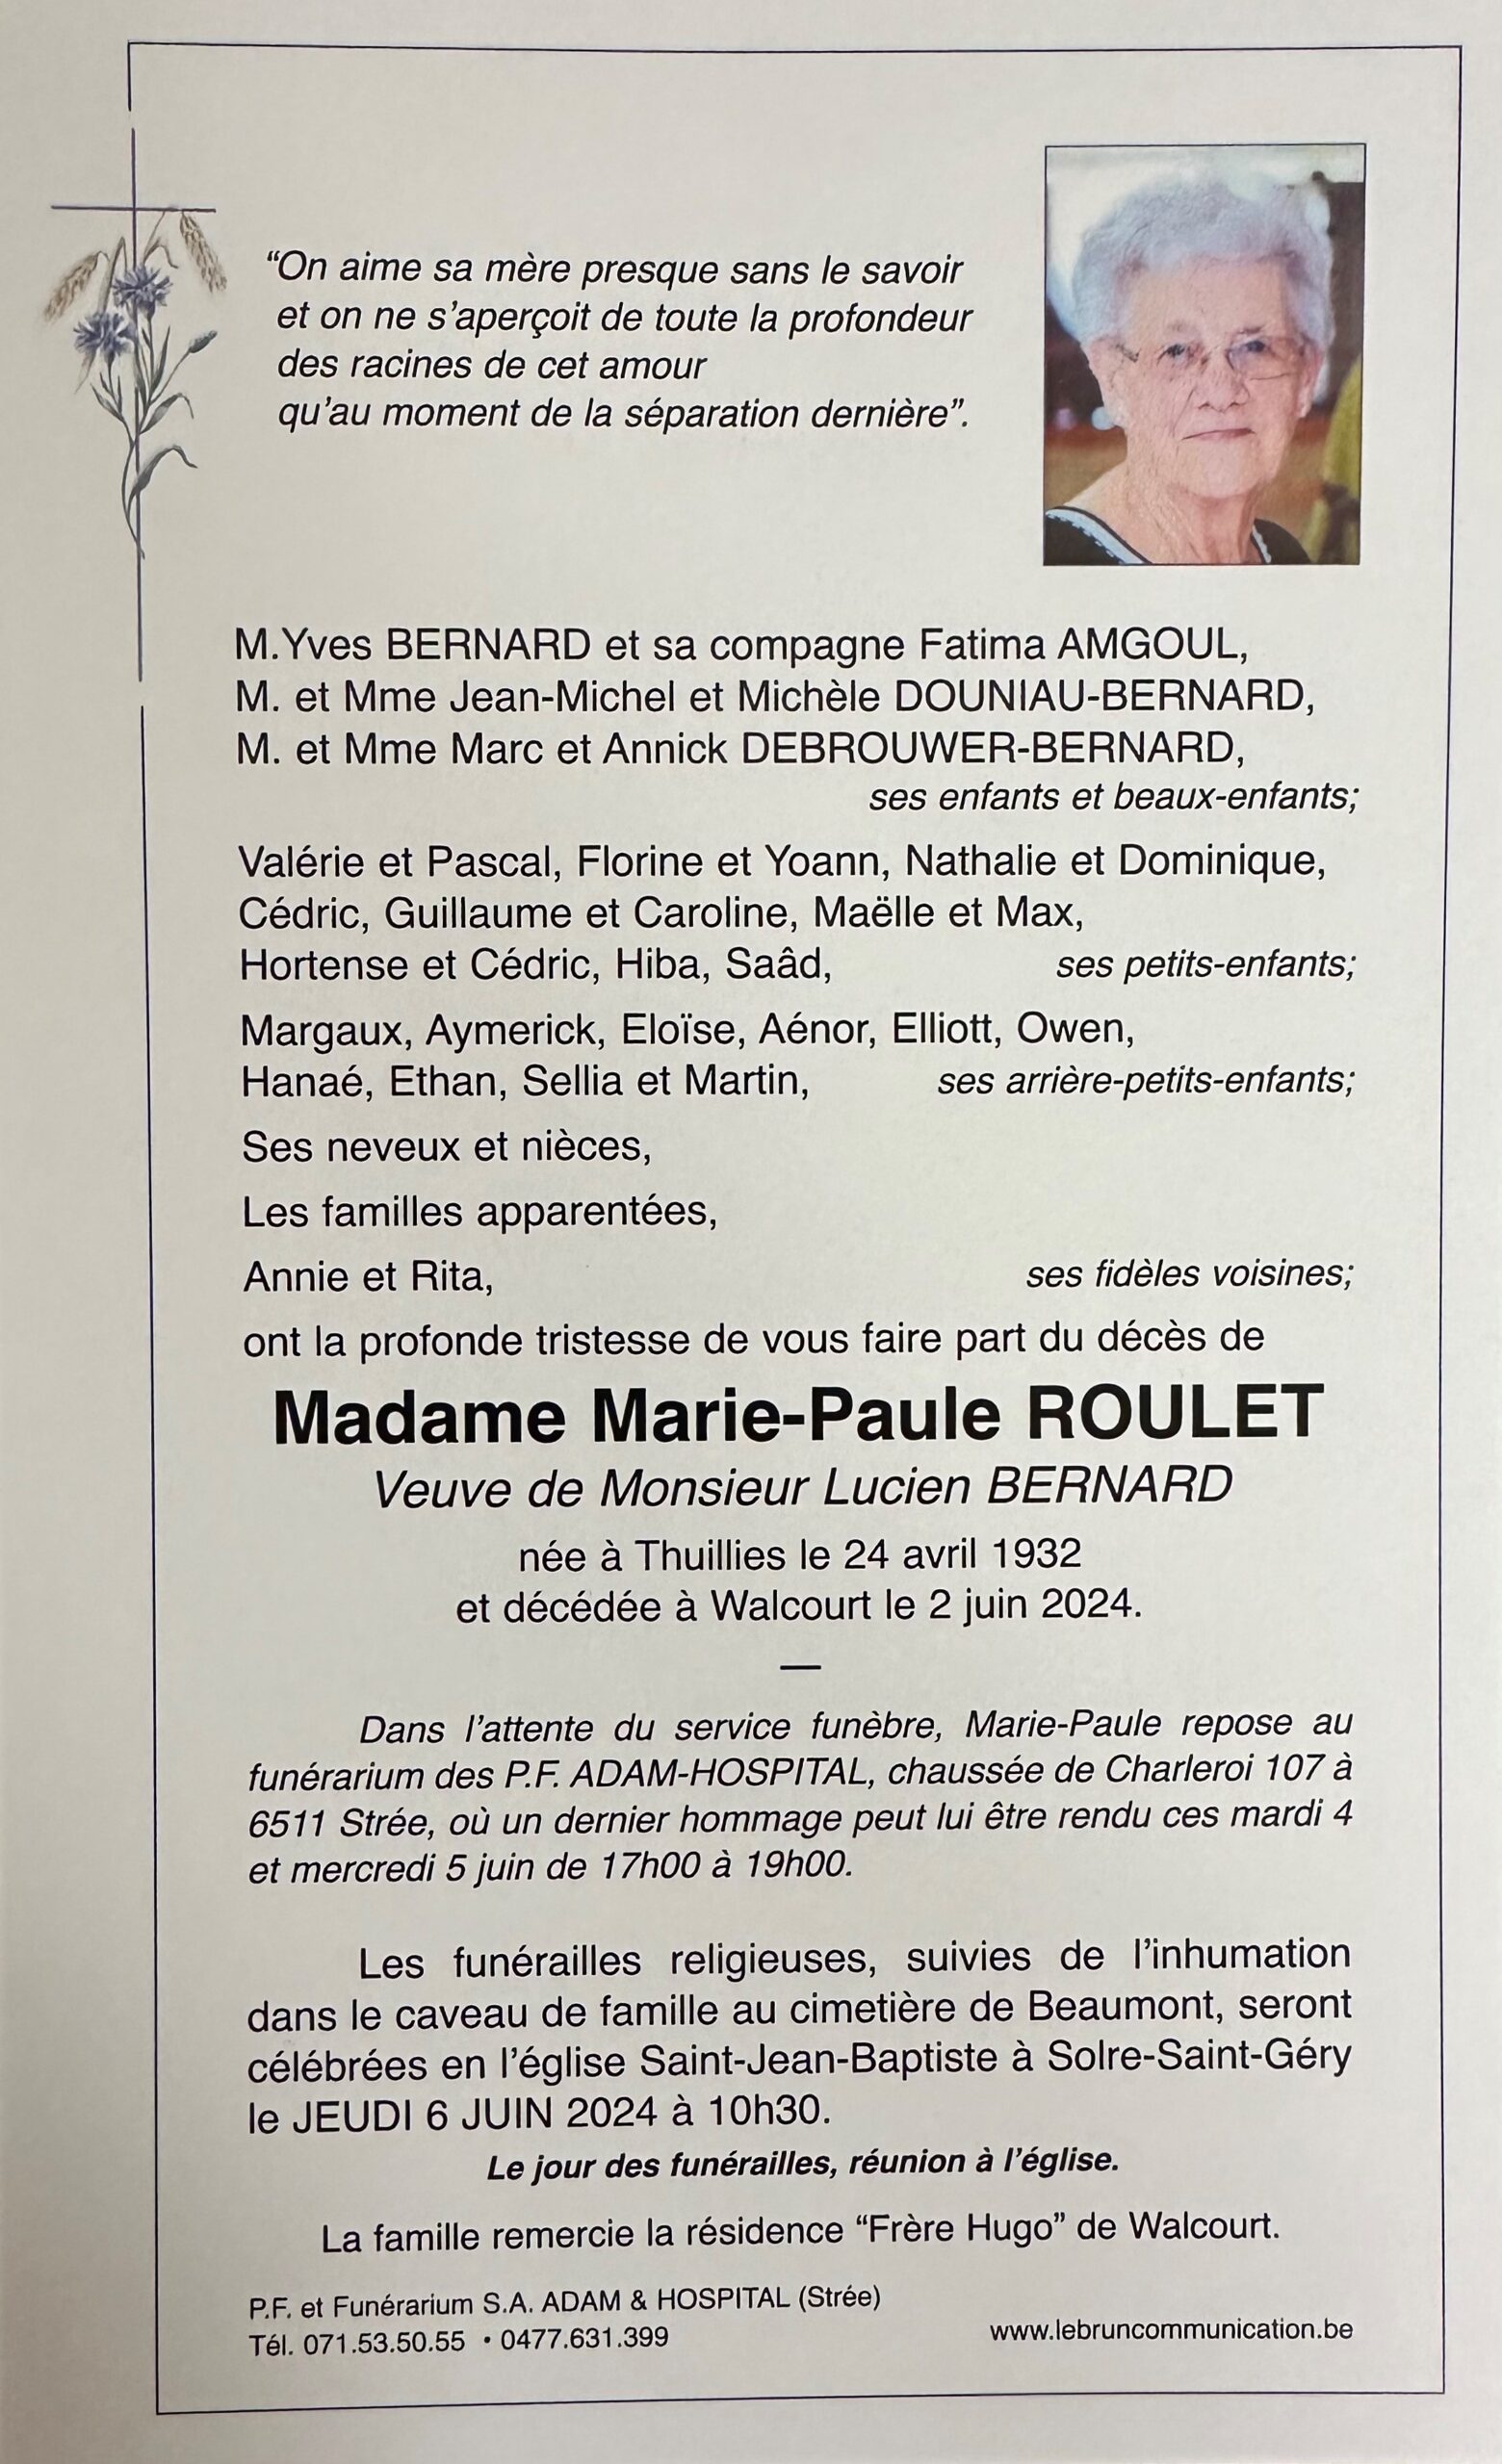 Marie Paule ROULET scaled | Funérailles Adam Hospital